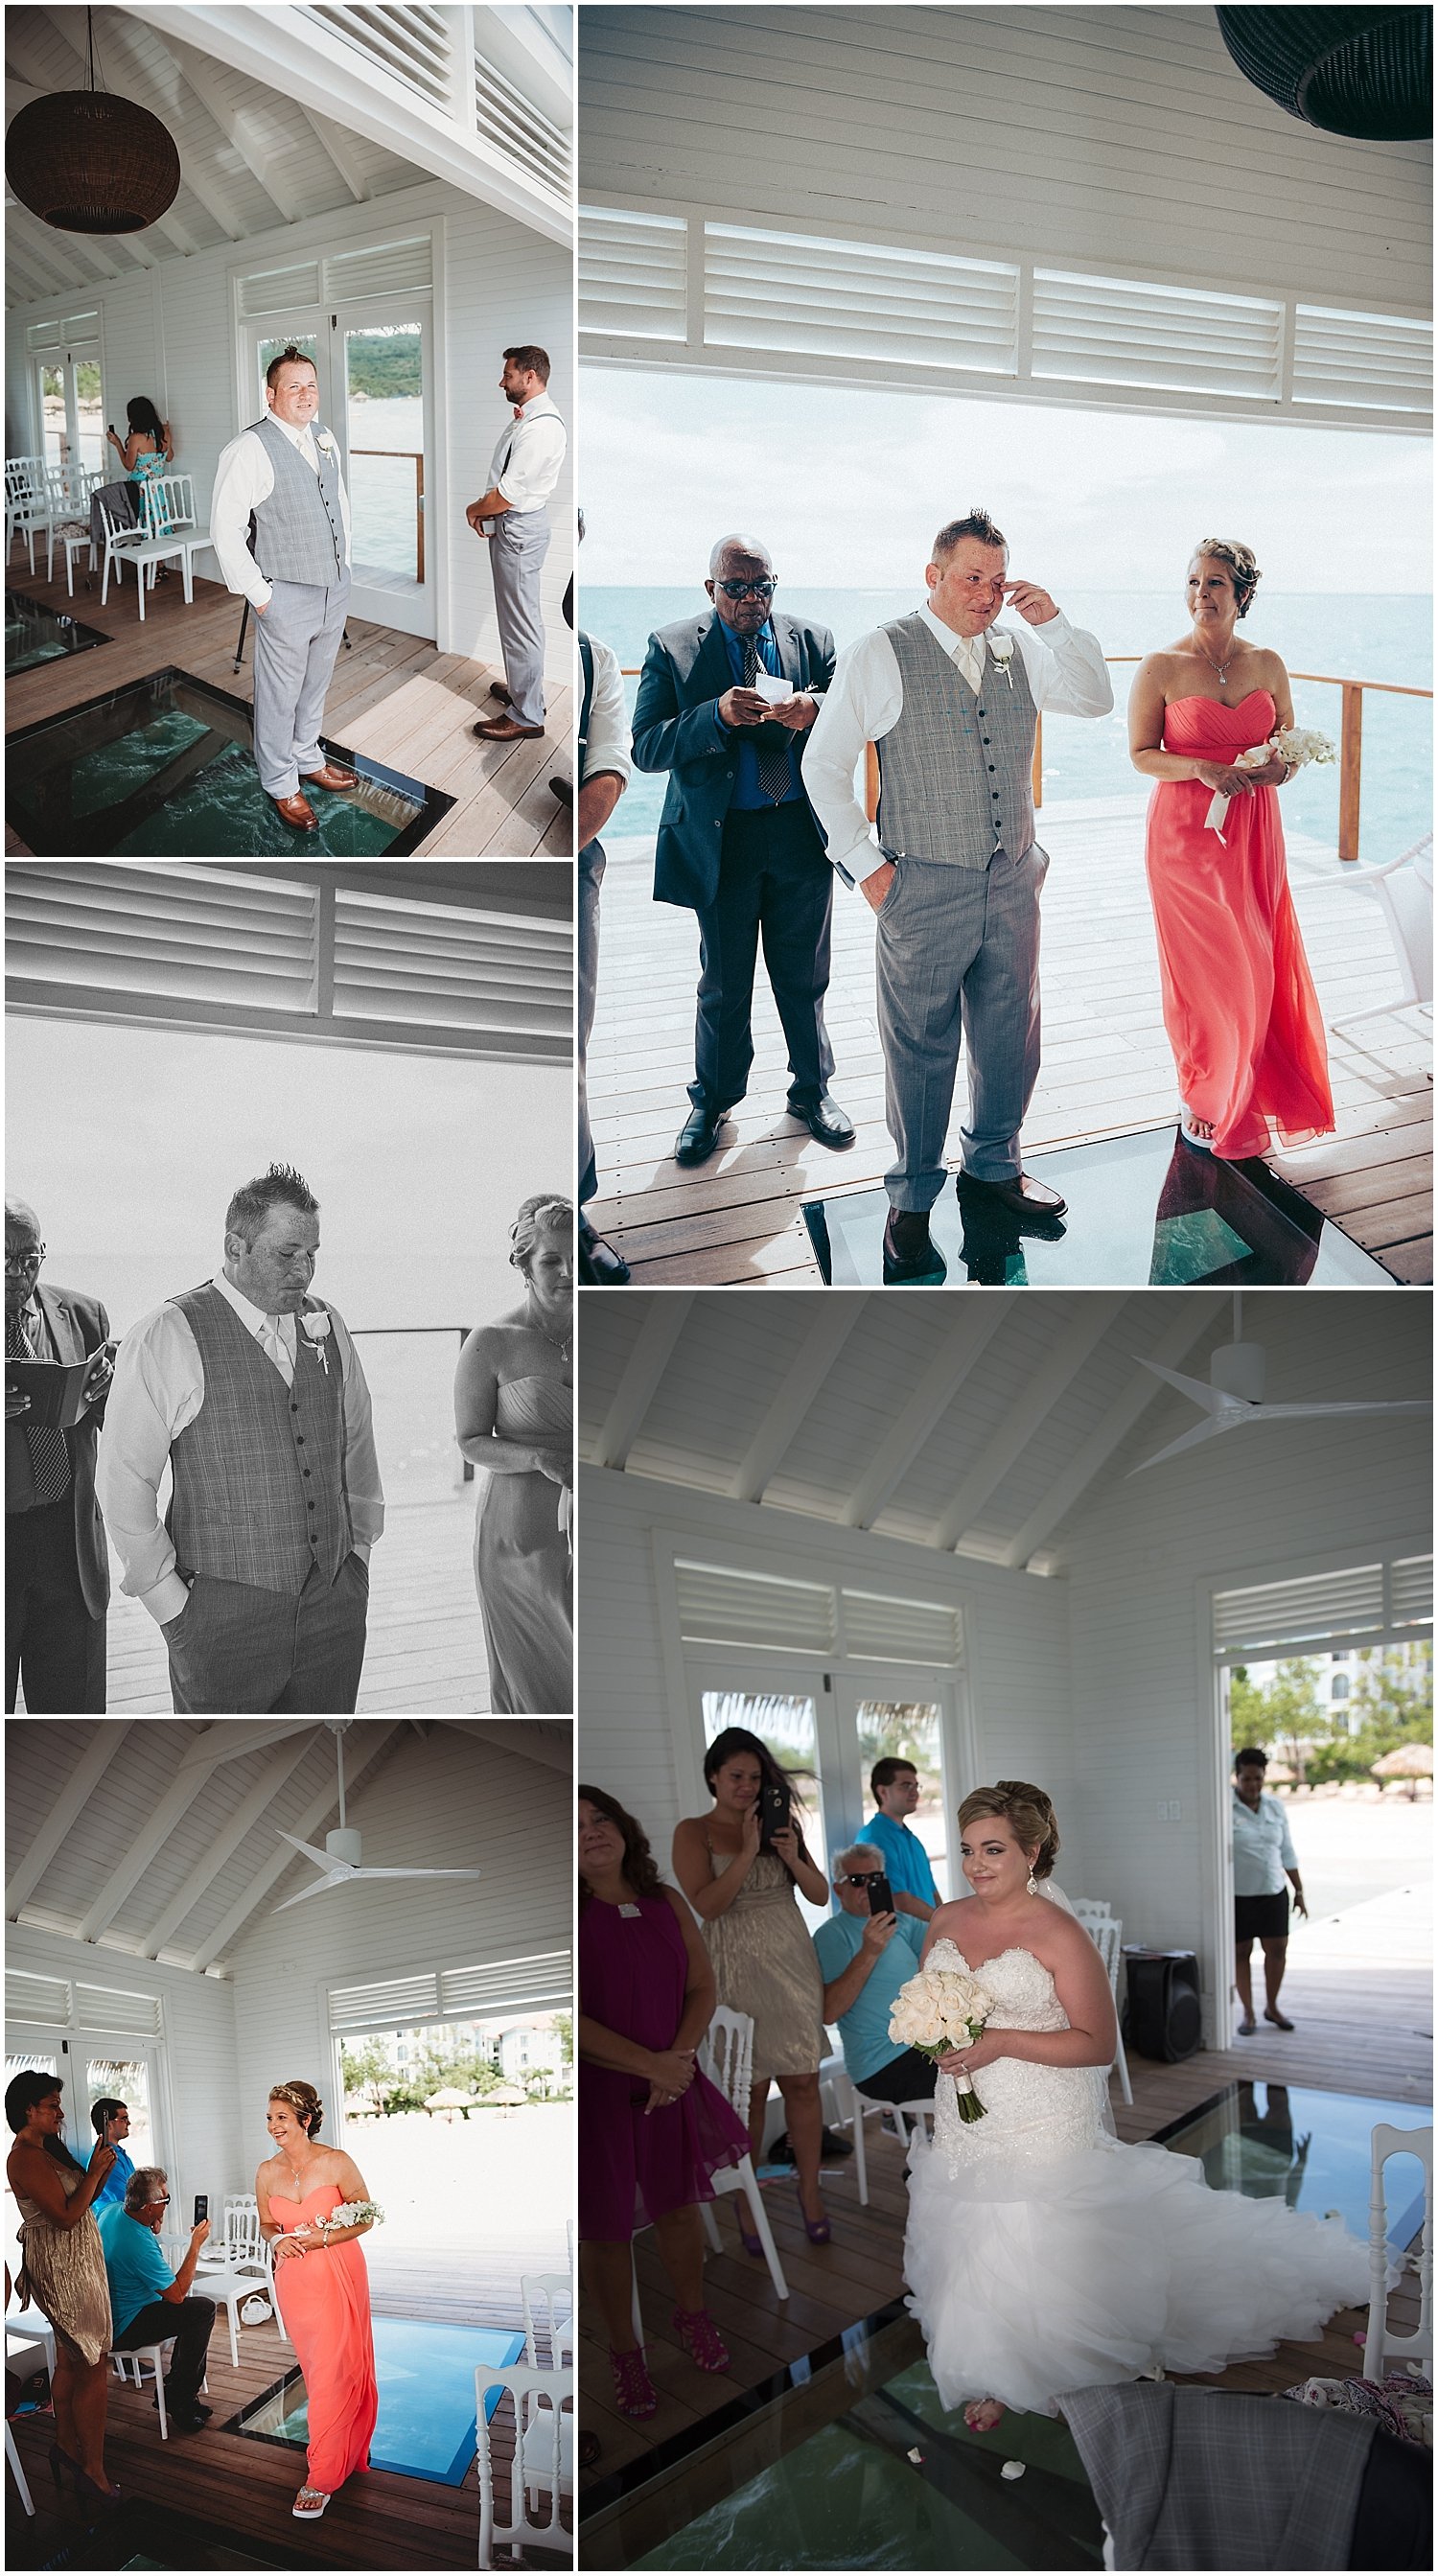 Destination Wedding Photographer at Sandals South Coast in Jamaica